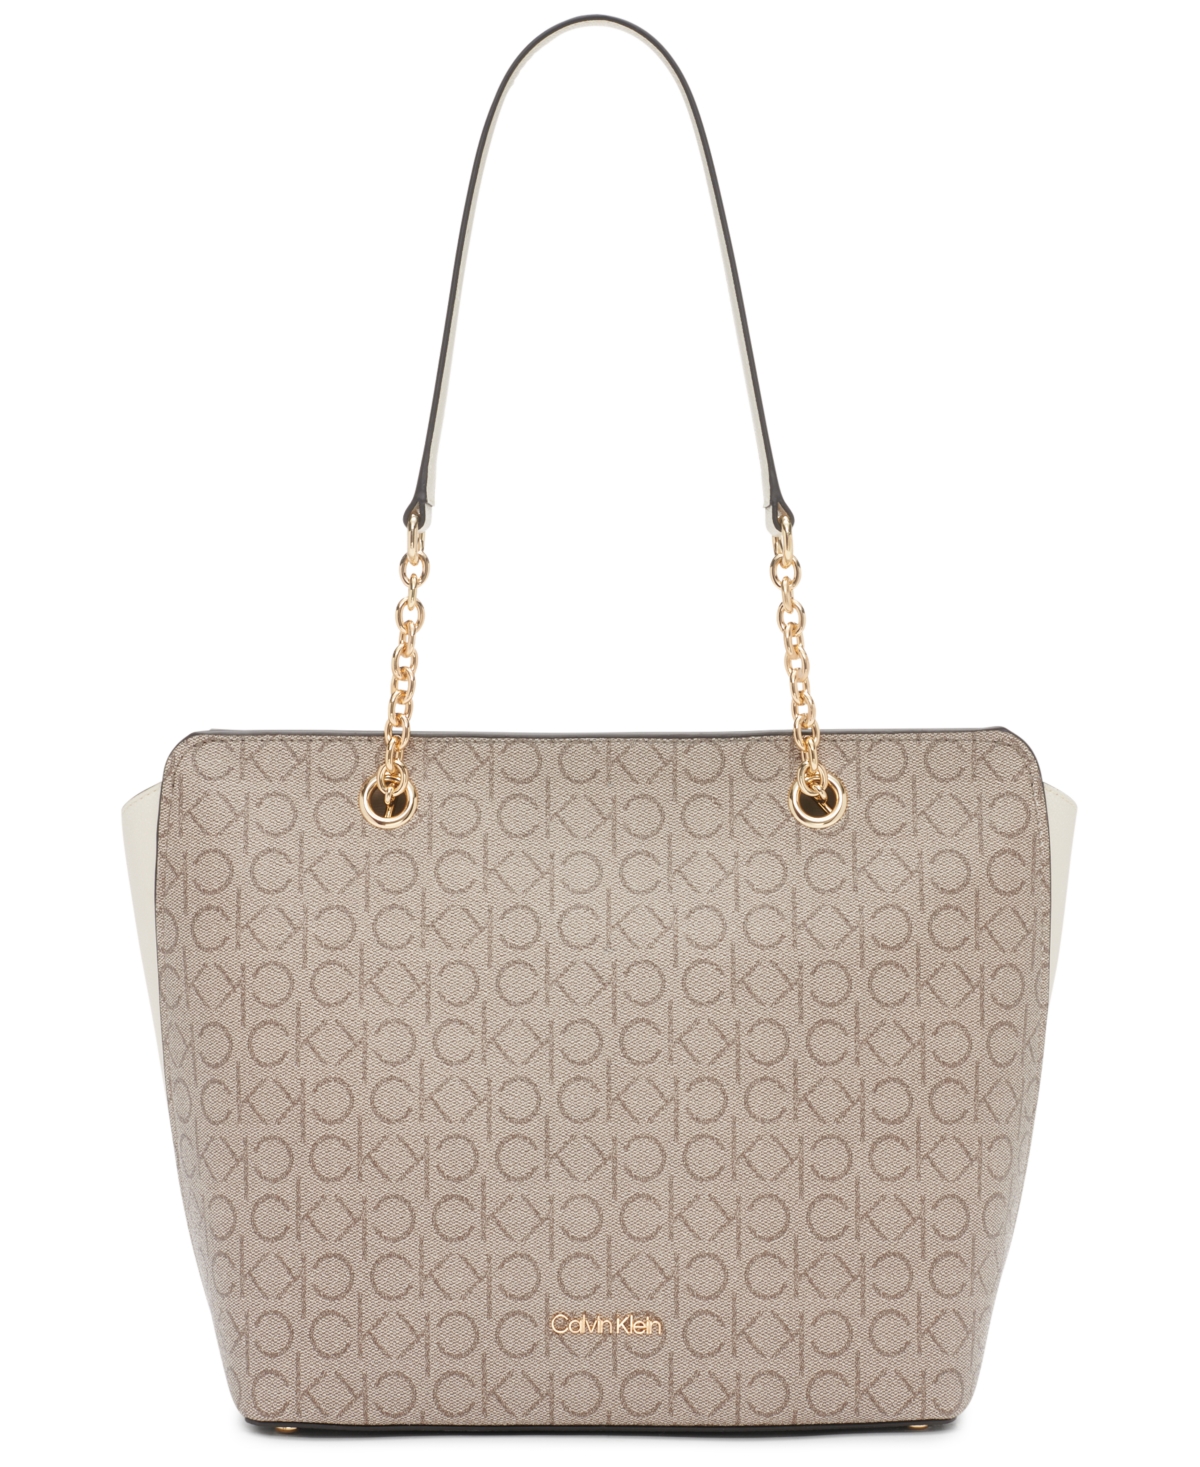 Calvin Klein Hailey Tote & Reviews - Handbags & Accessories - Macy's